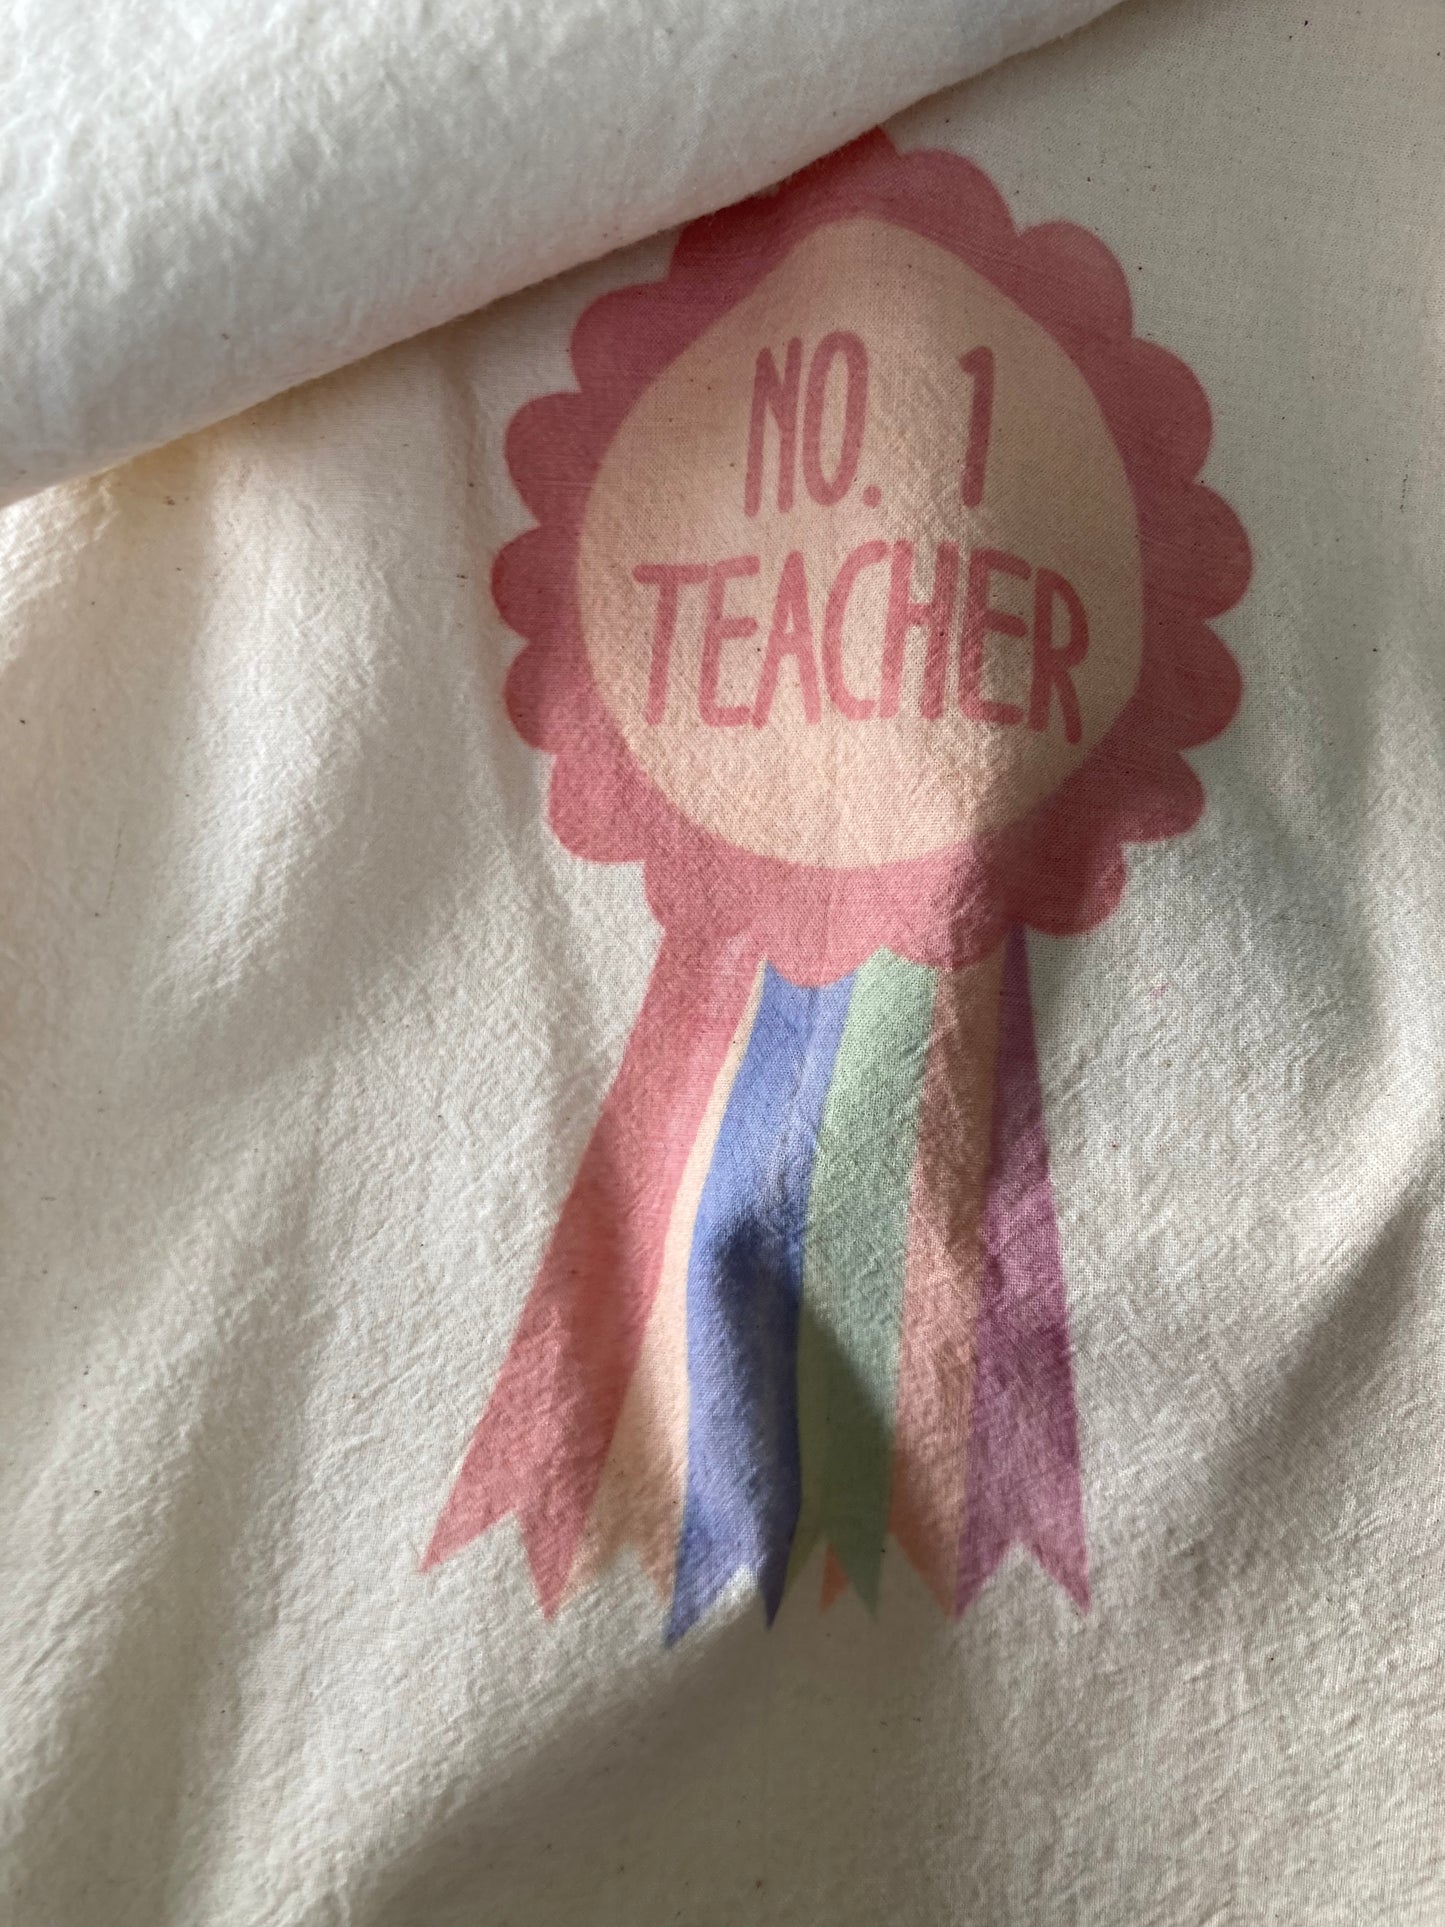 Teacher tote bag